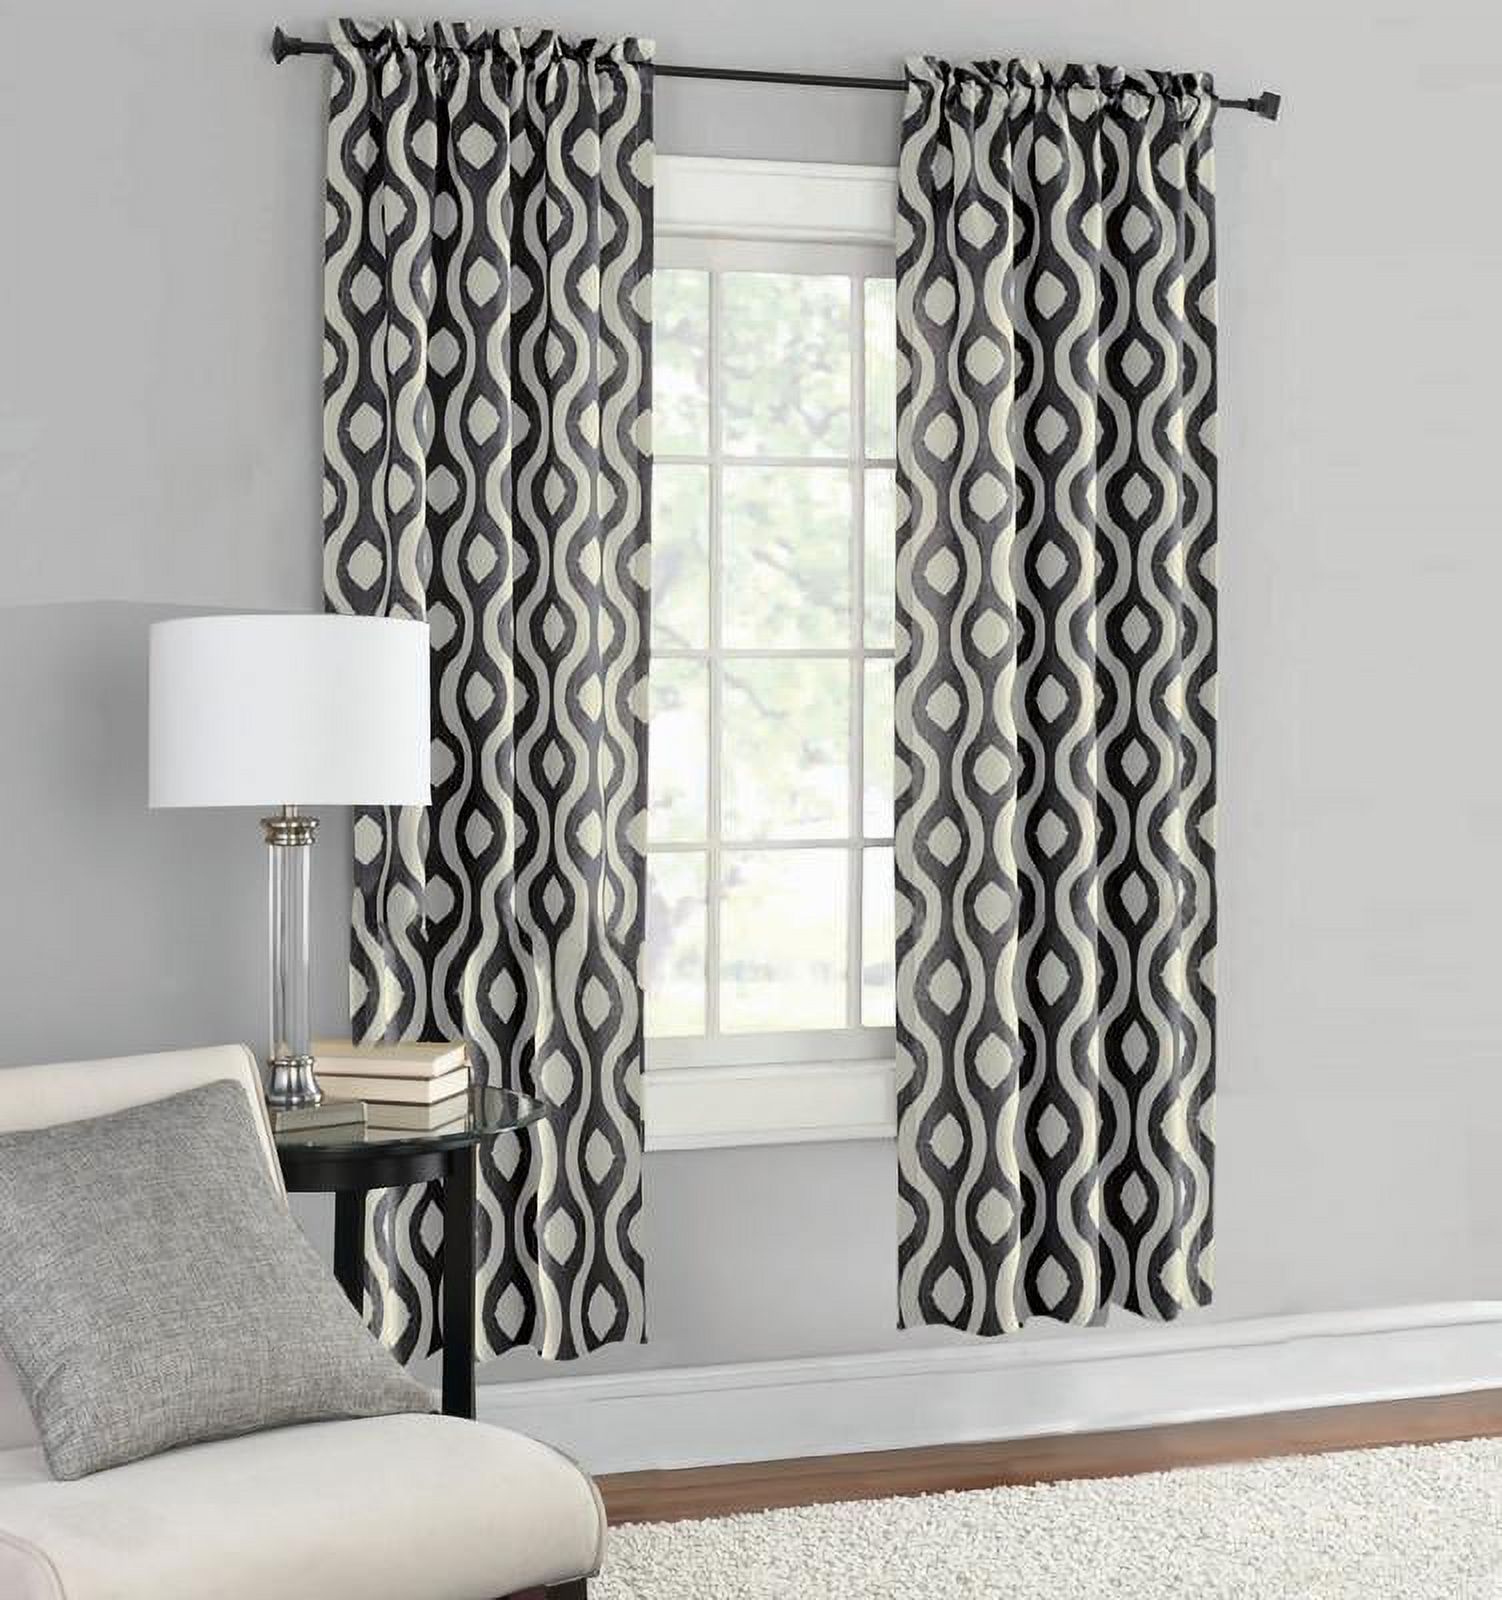 Mainstays Thermal Wave Print Room Darkening Rod Pocket Window Curtain Panel Pair, Set of 2, Black, 30 x 84 - image 1 of 2